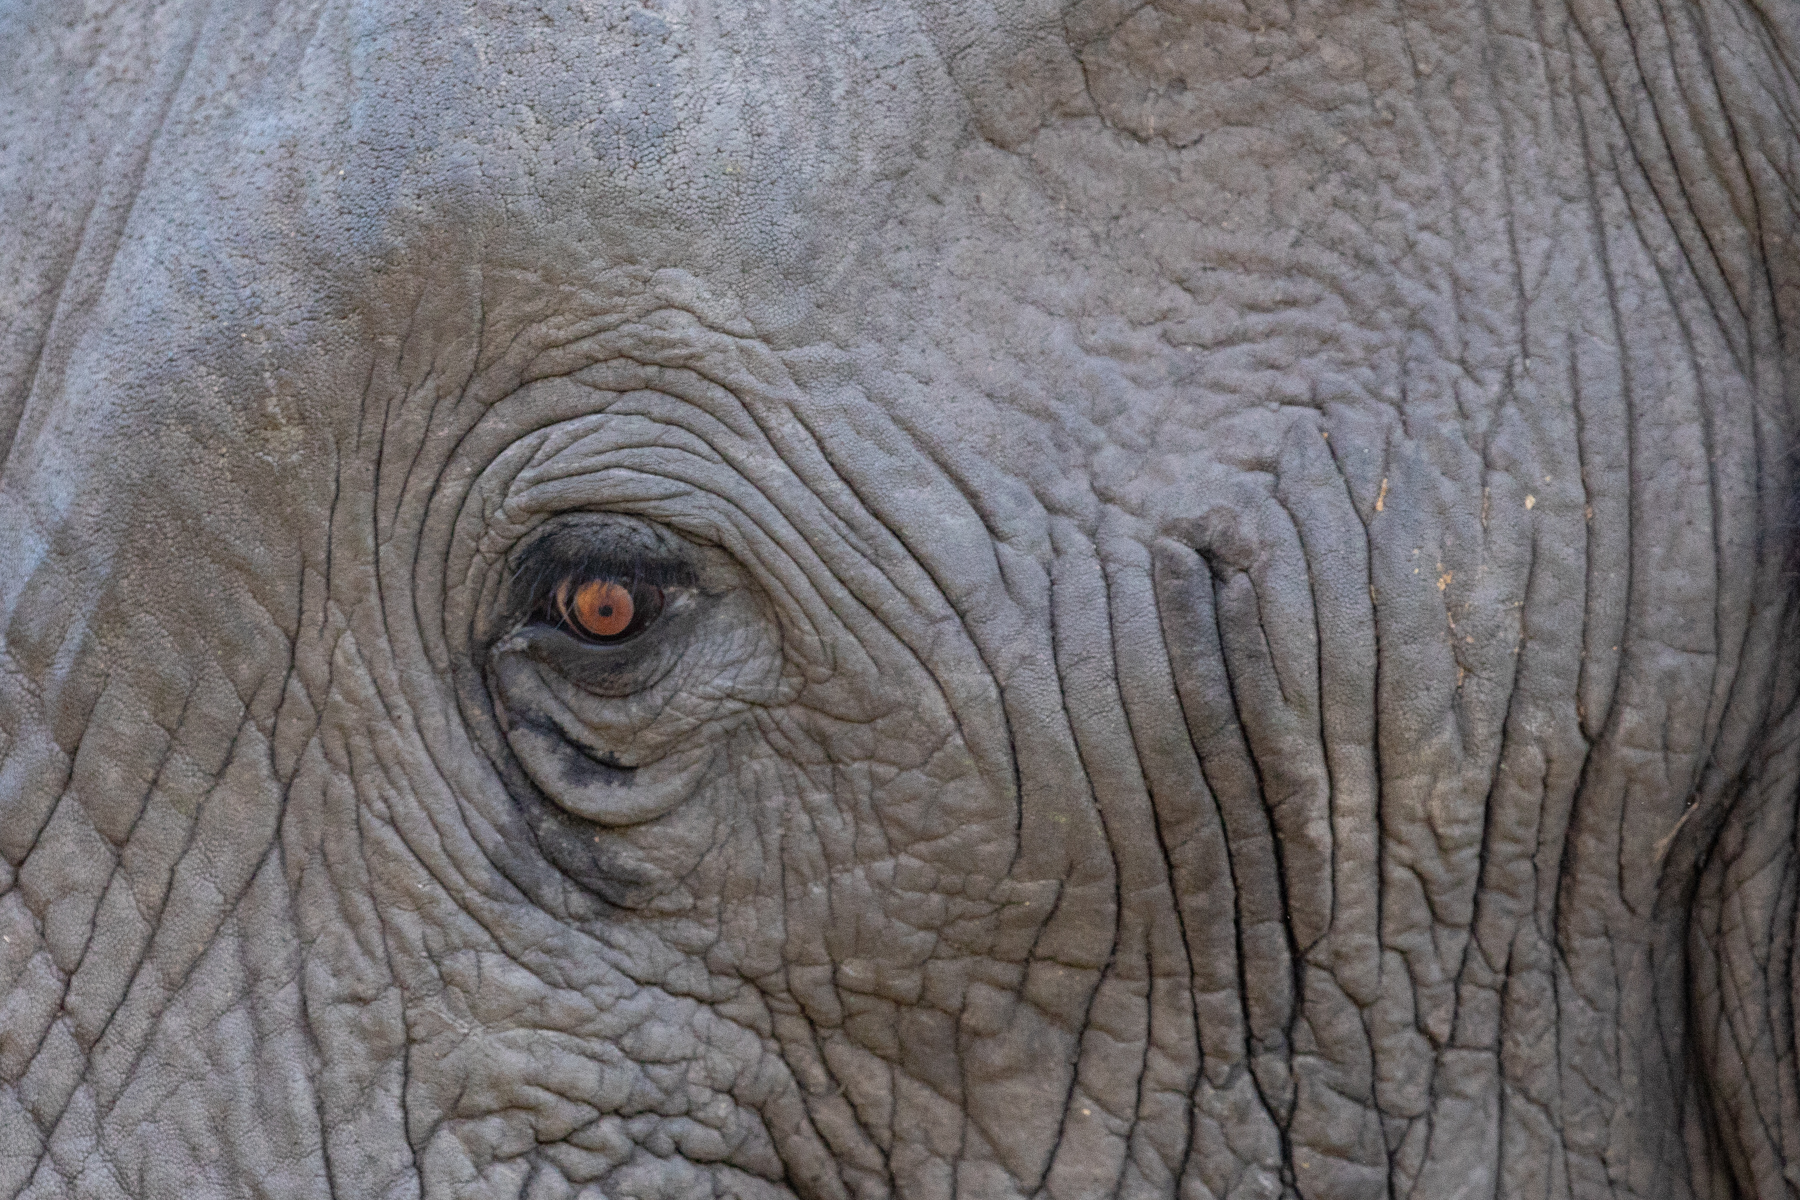 An elephant's eye has seen so very much...